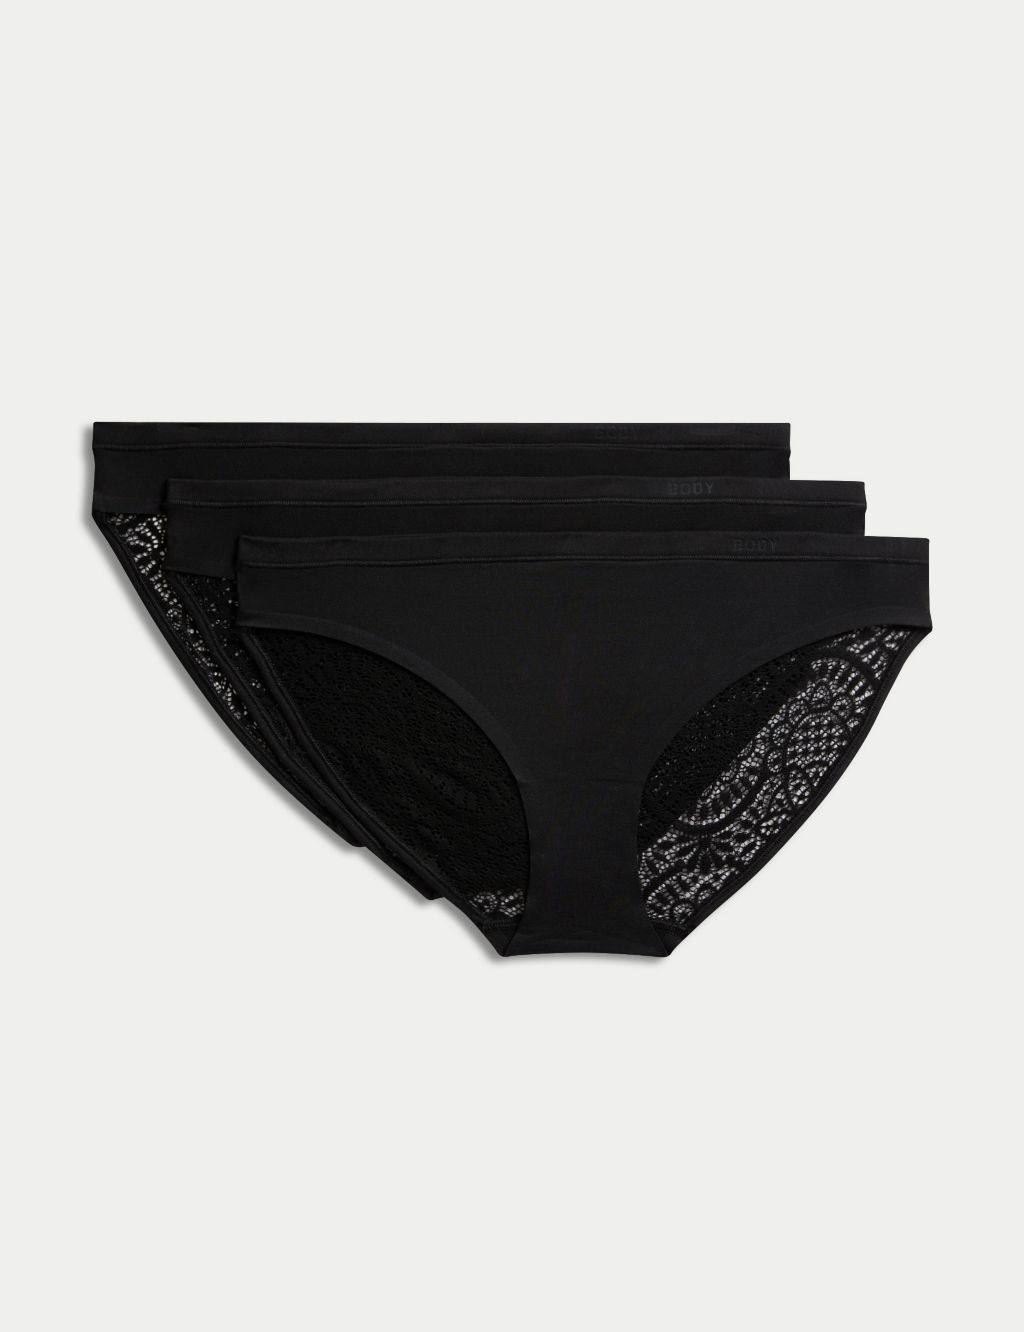 M&S Body Lace Bikini Knickers, 3 Pack, 8-18, Black